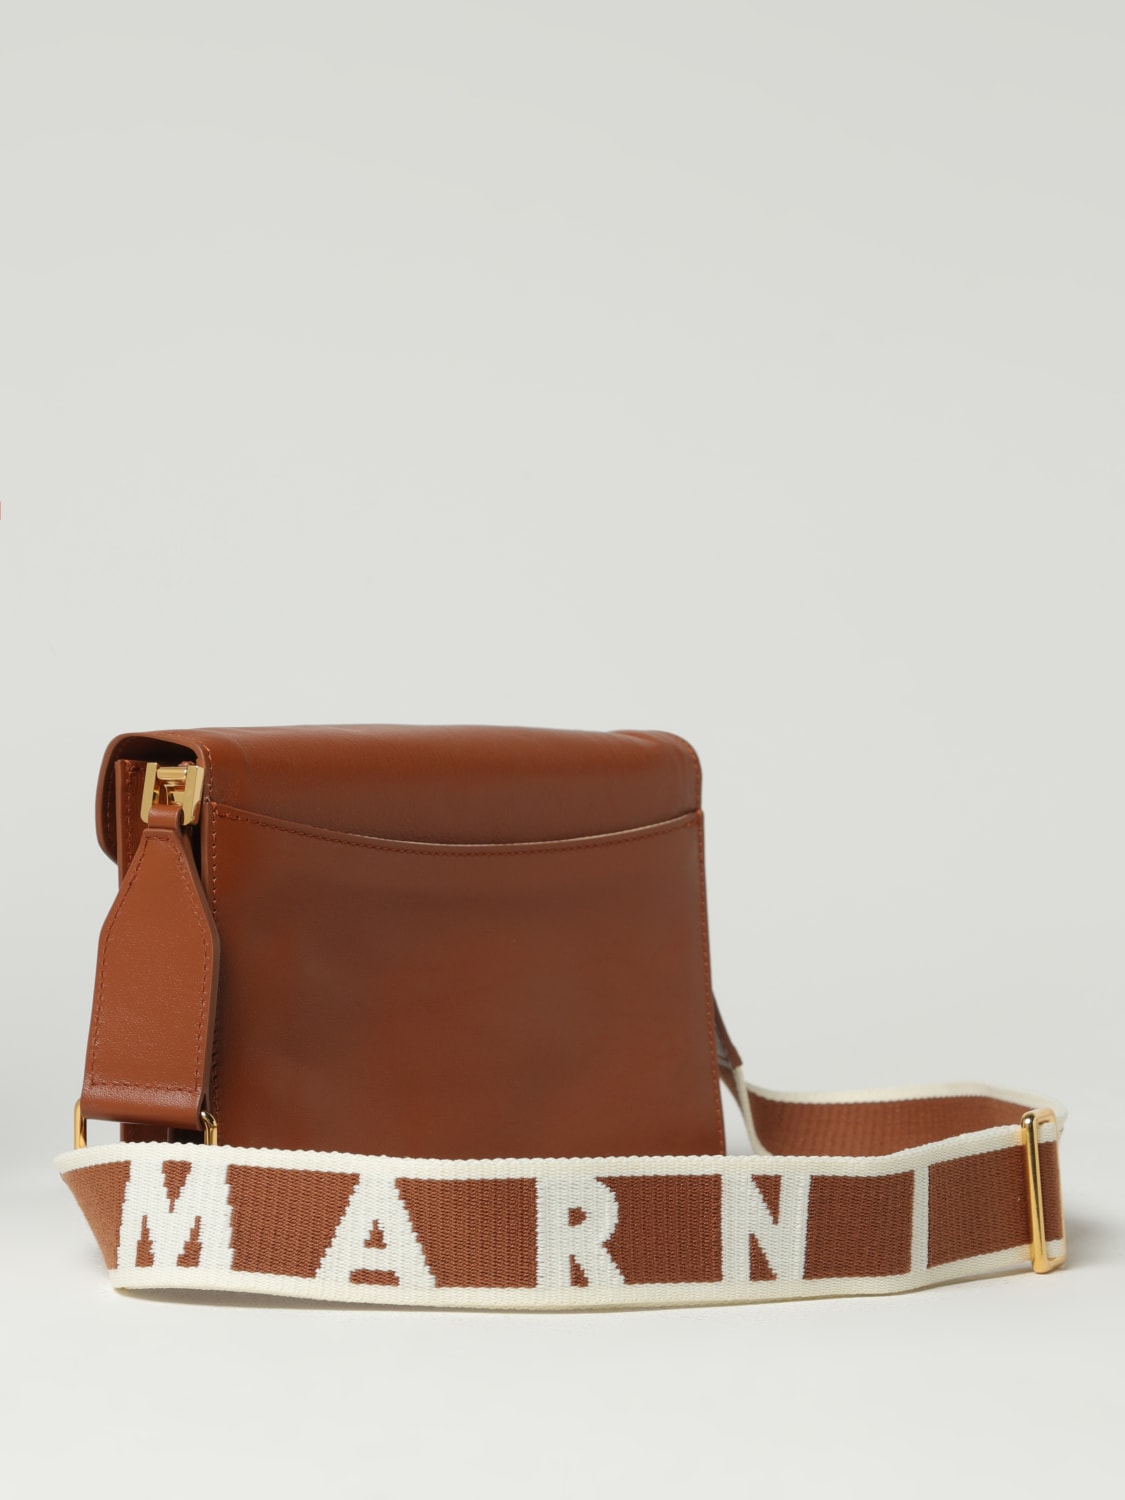 Marni Trunk Soft Medium Bag at FORZIERI